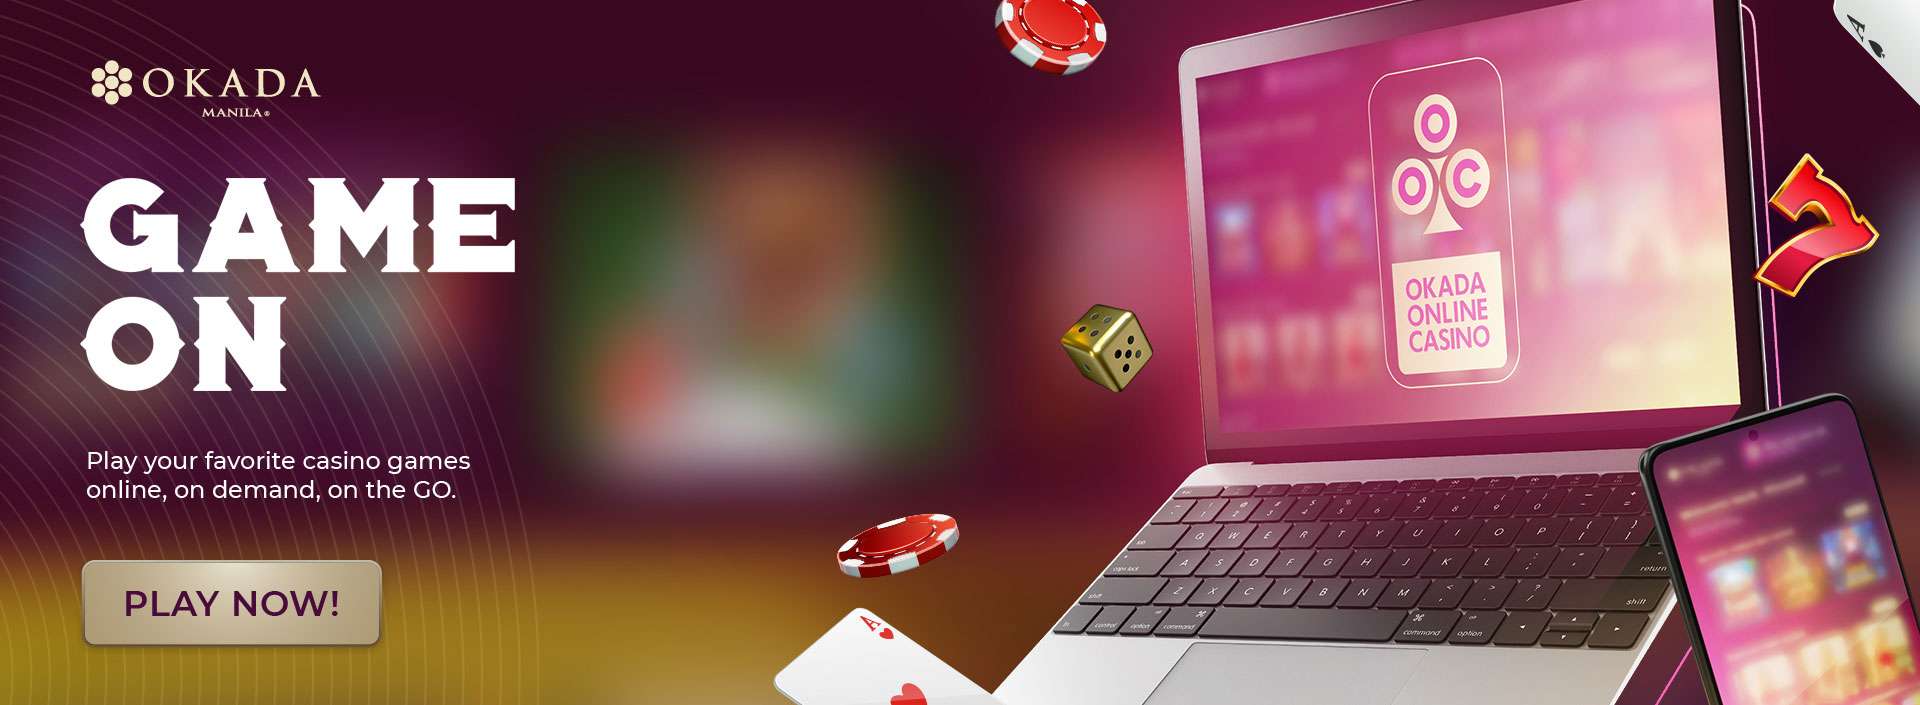 okada online casino registration app